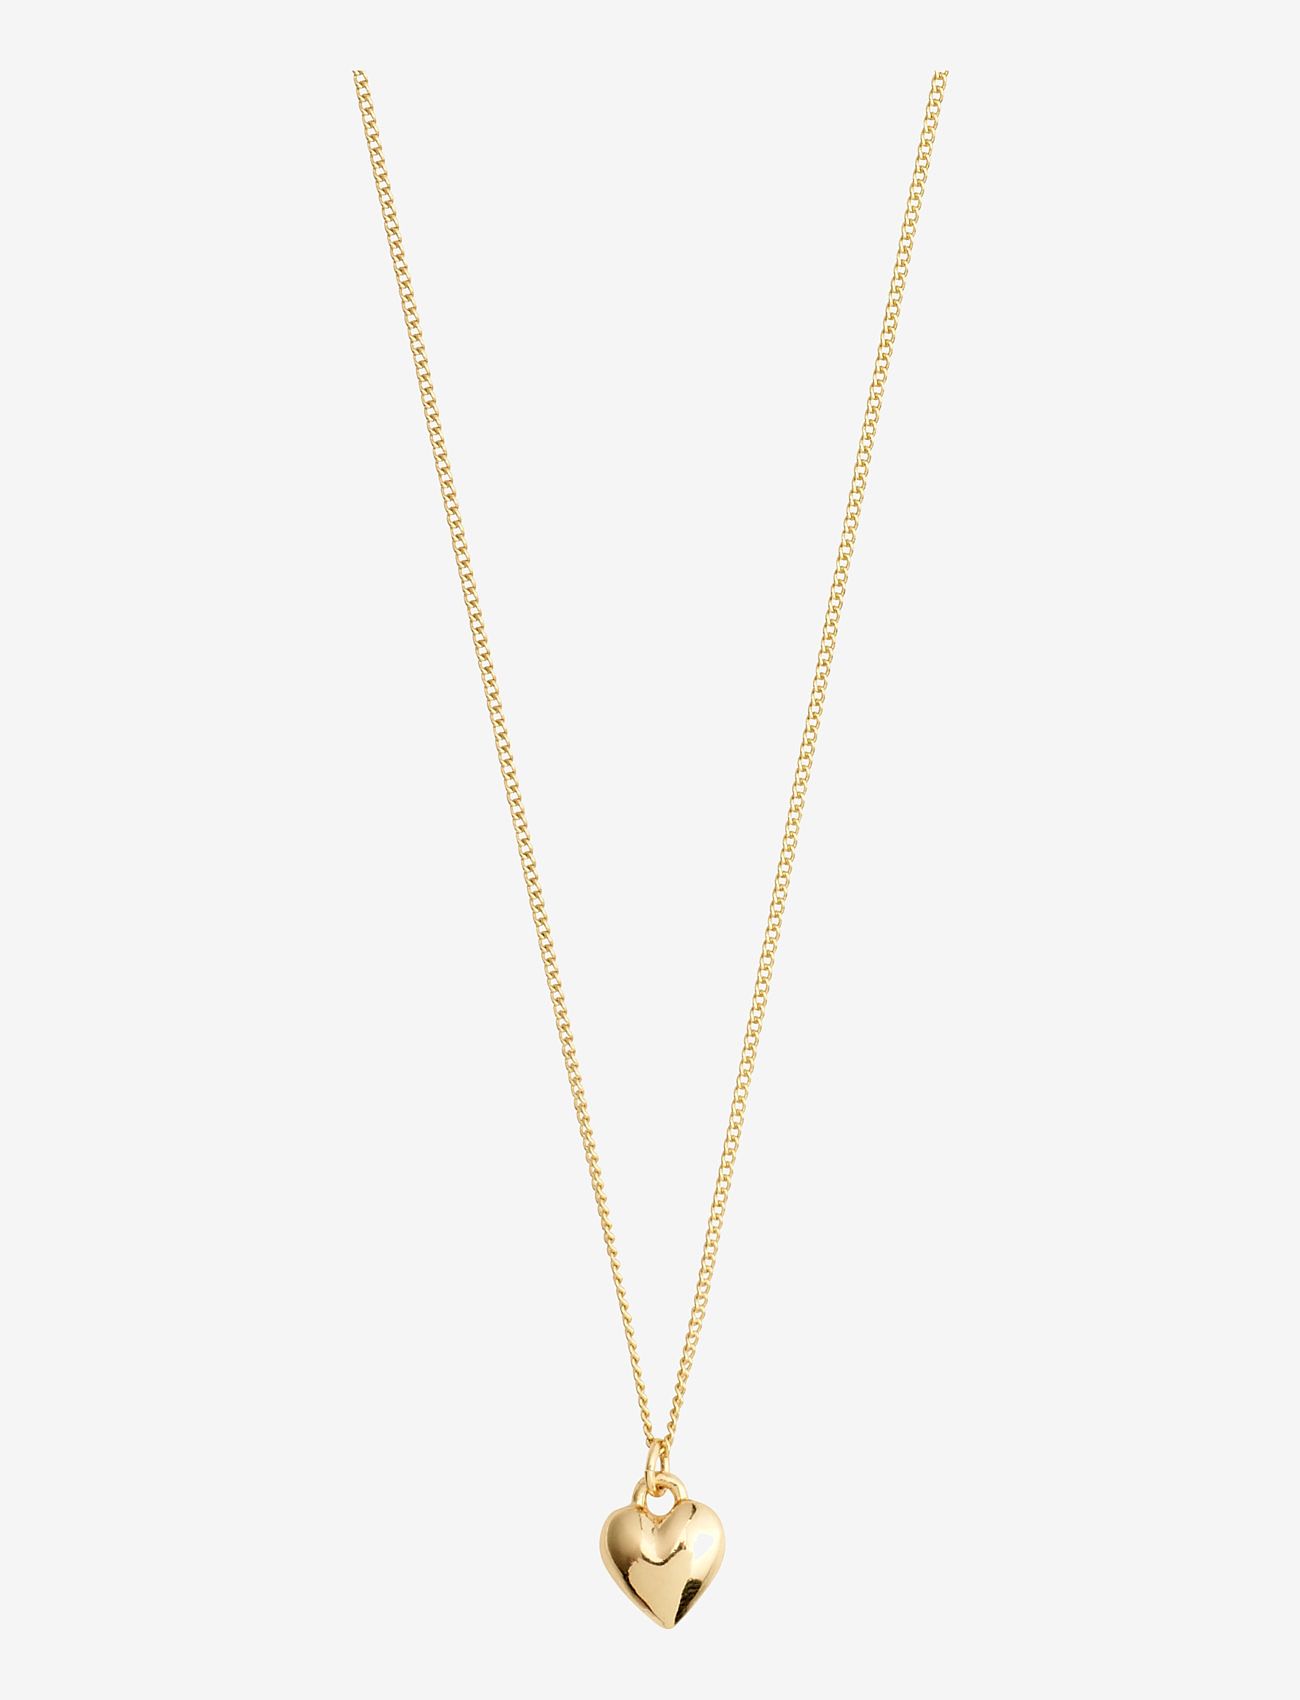 Pilgrim - AFRODITTE recycled heart necklace gold-plated - odzież imprezowa w cenach outletowych - gold plated - 0